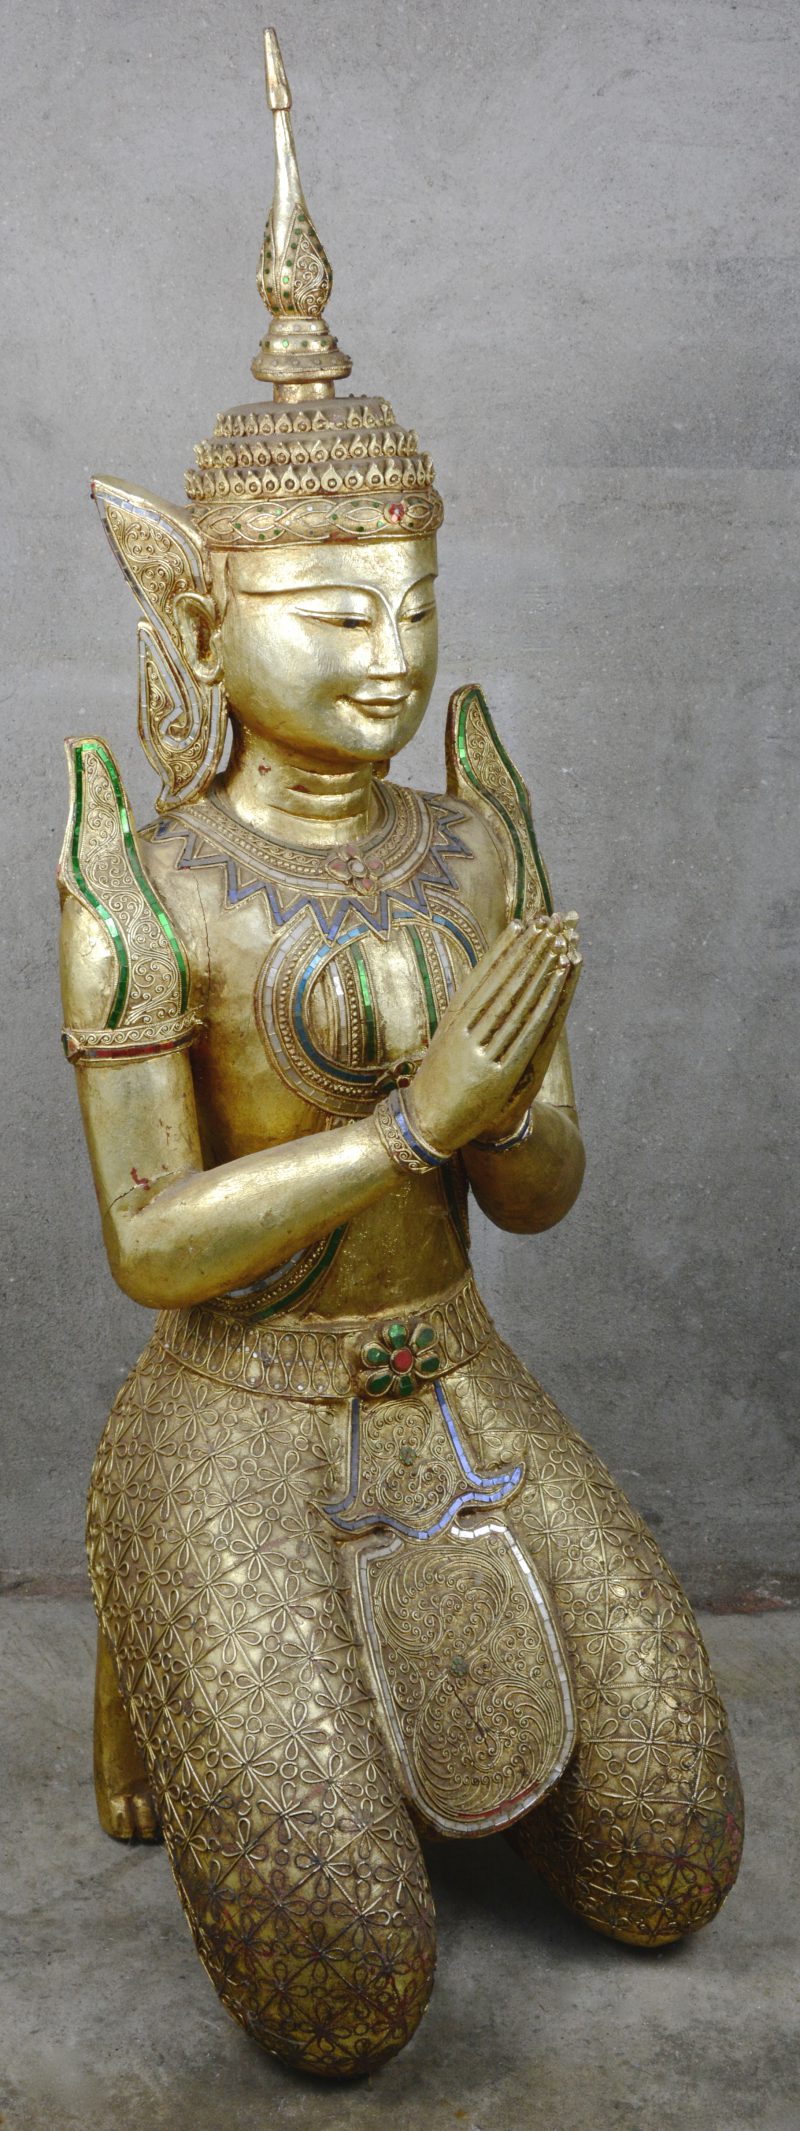 Een knielende Thaise Boeddha van verguld en gepolychromeerd hout.